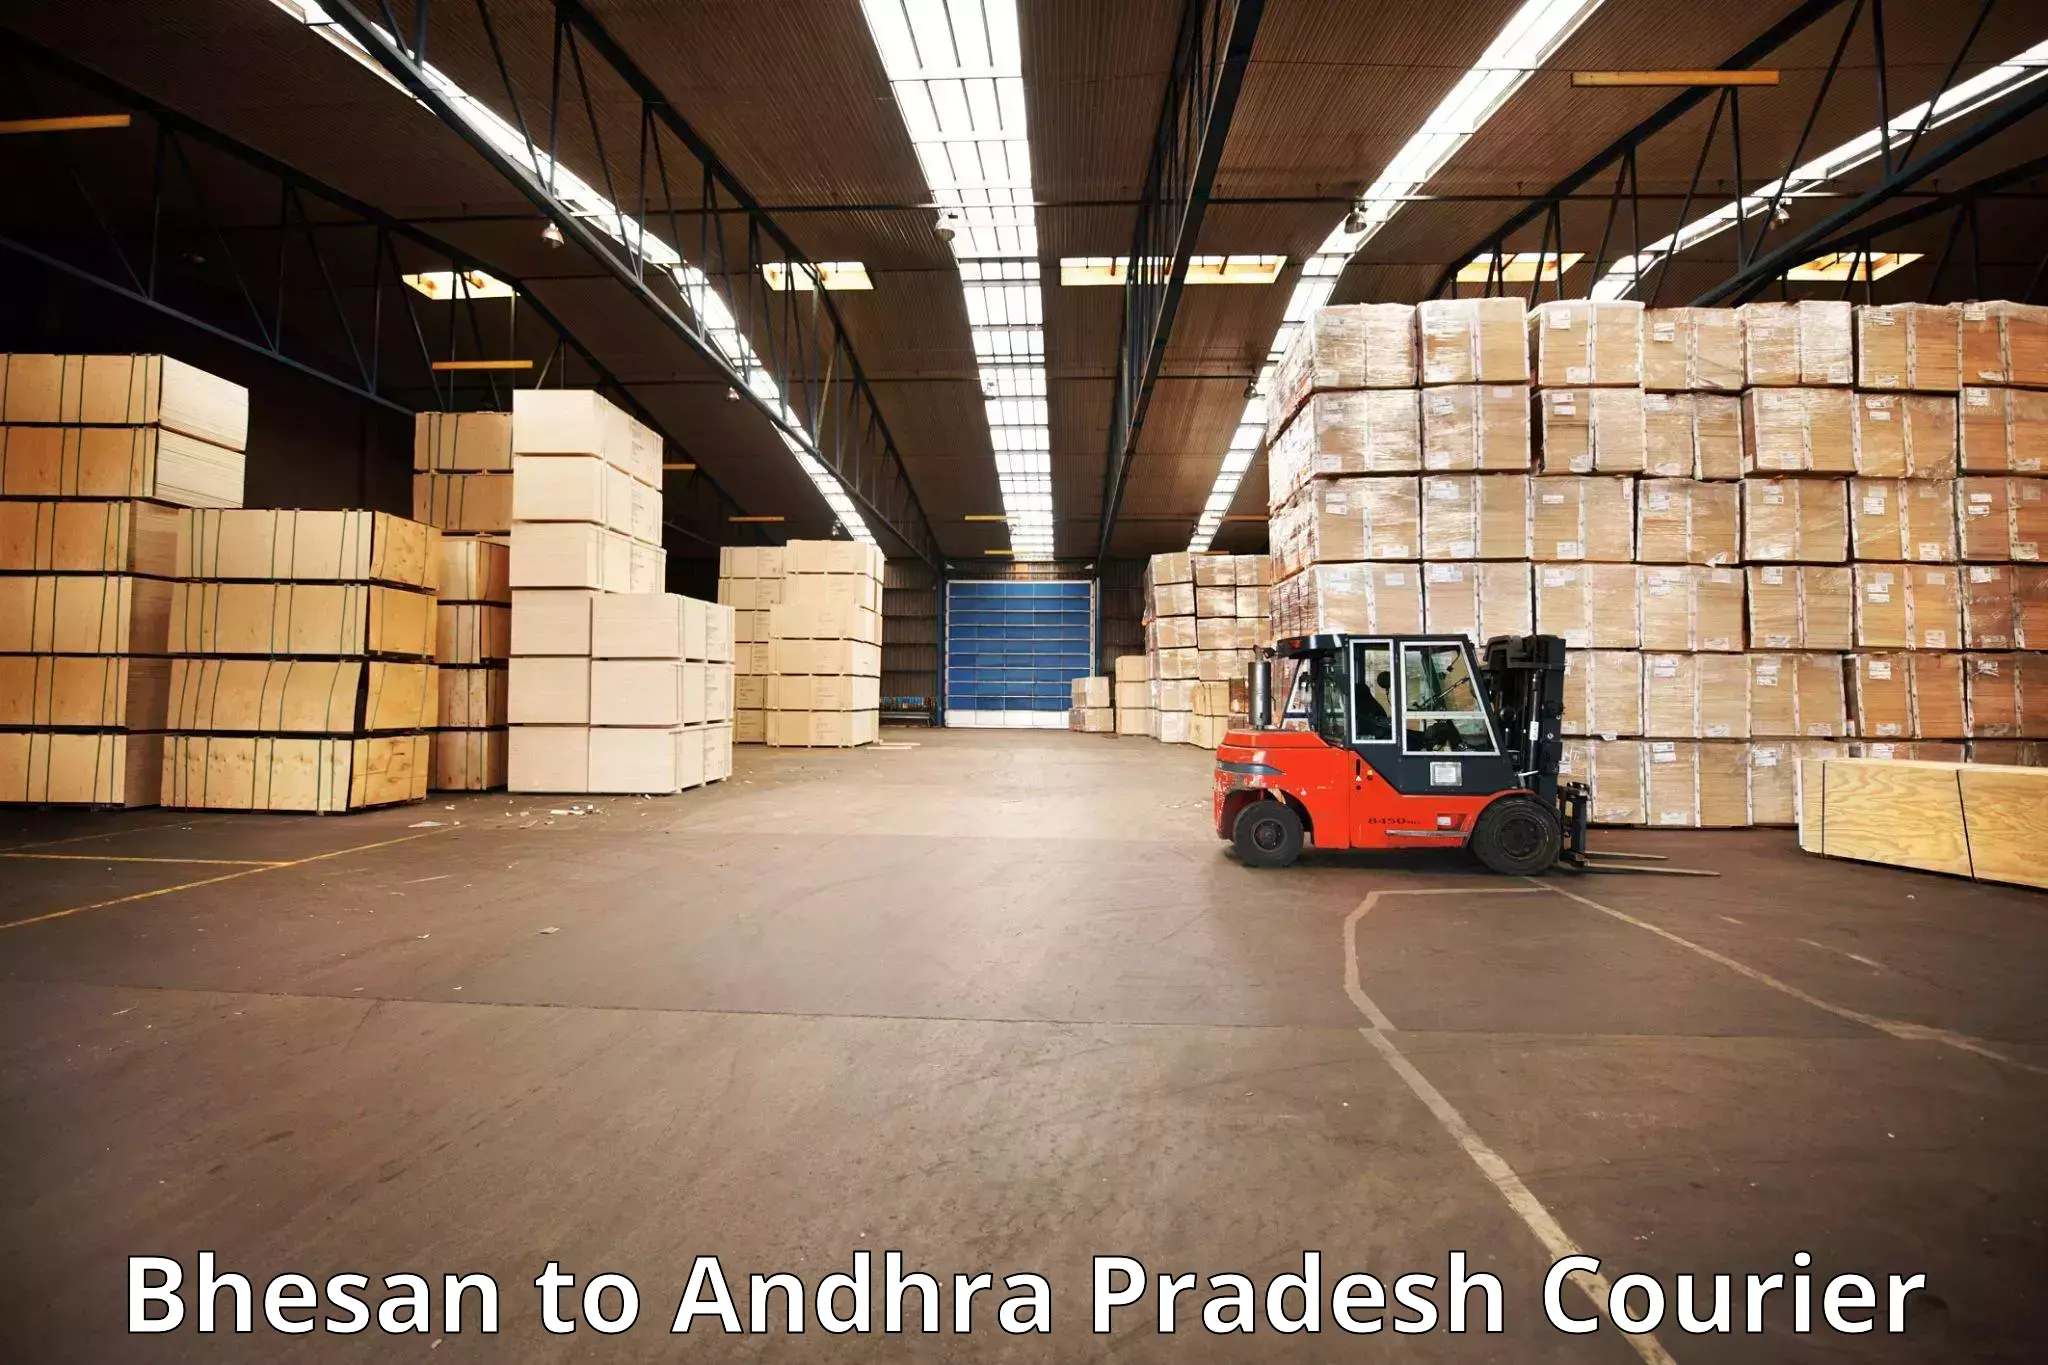 Luggage transport company Bhesan to Andhra Pradesh